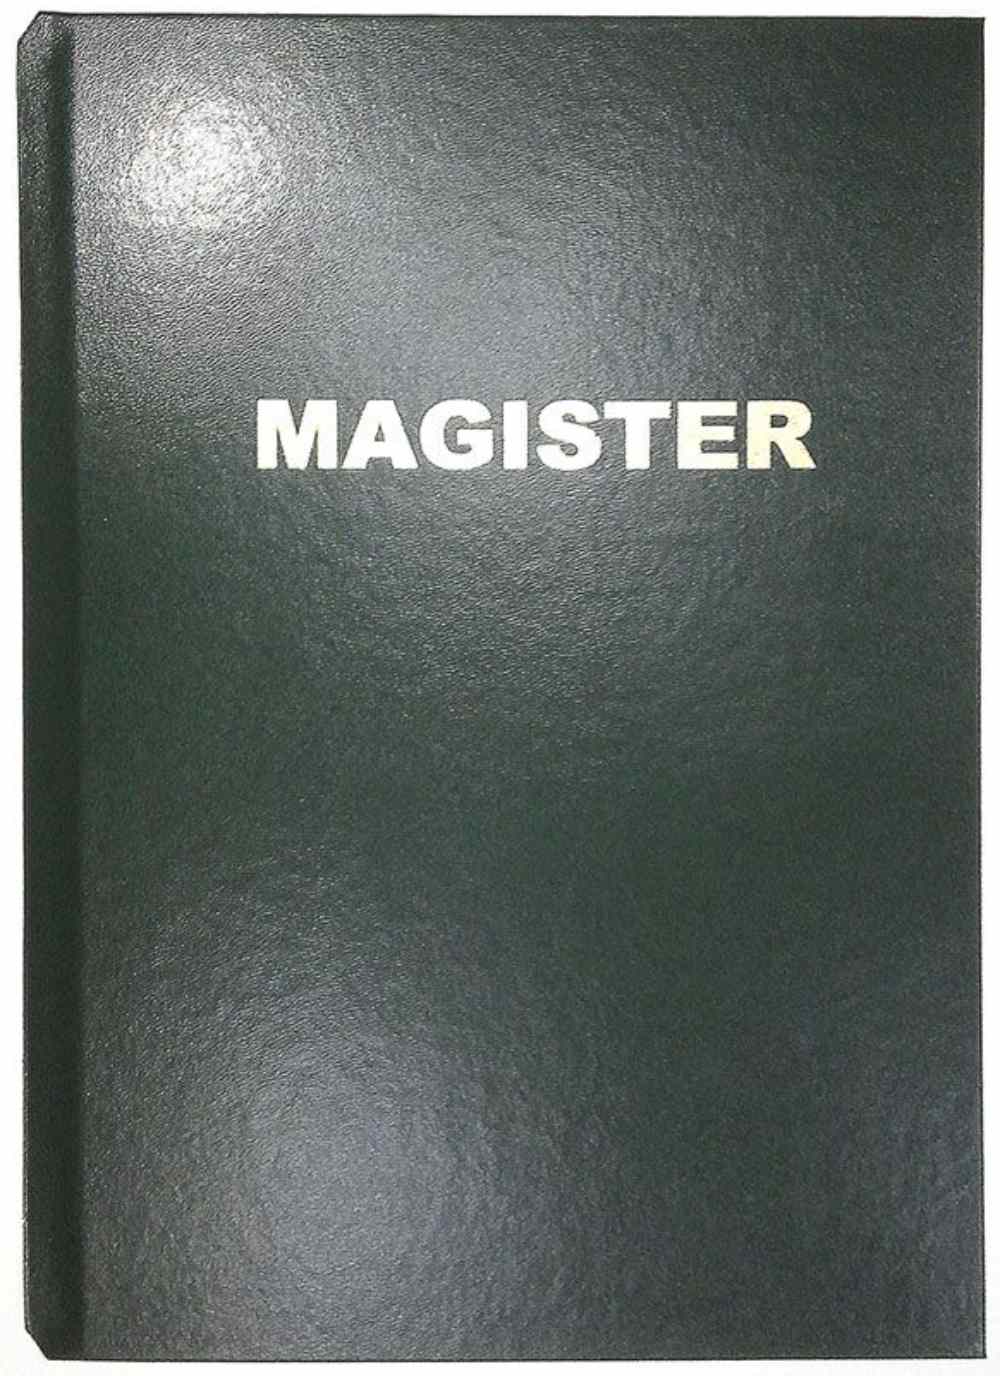 Твердые обложки для МеталБинд O.HARD COVER Magister А4, 304х212 мм с покрытием «кожа лайка» без окна, бордовые